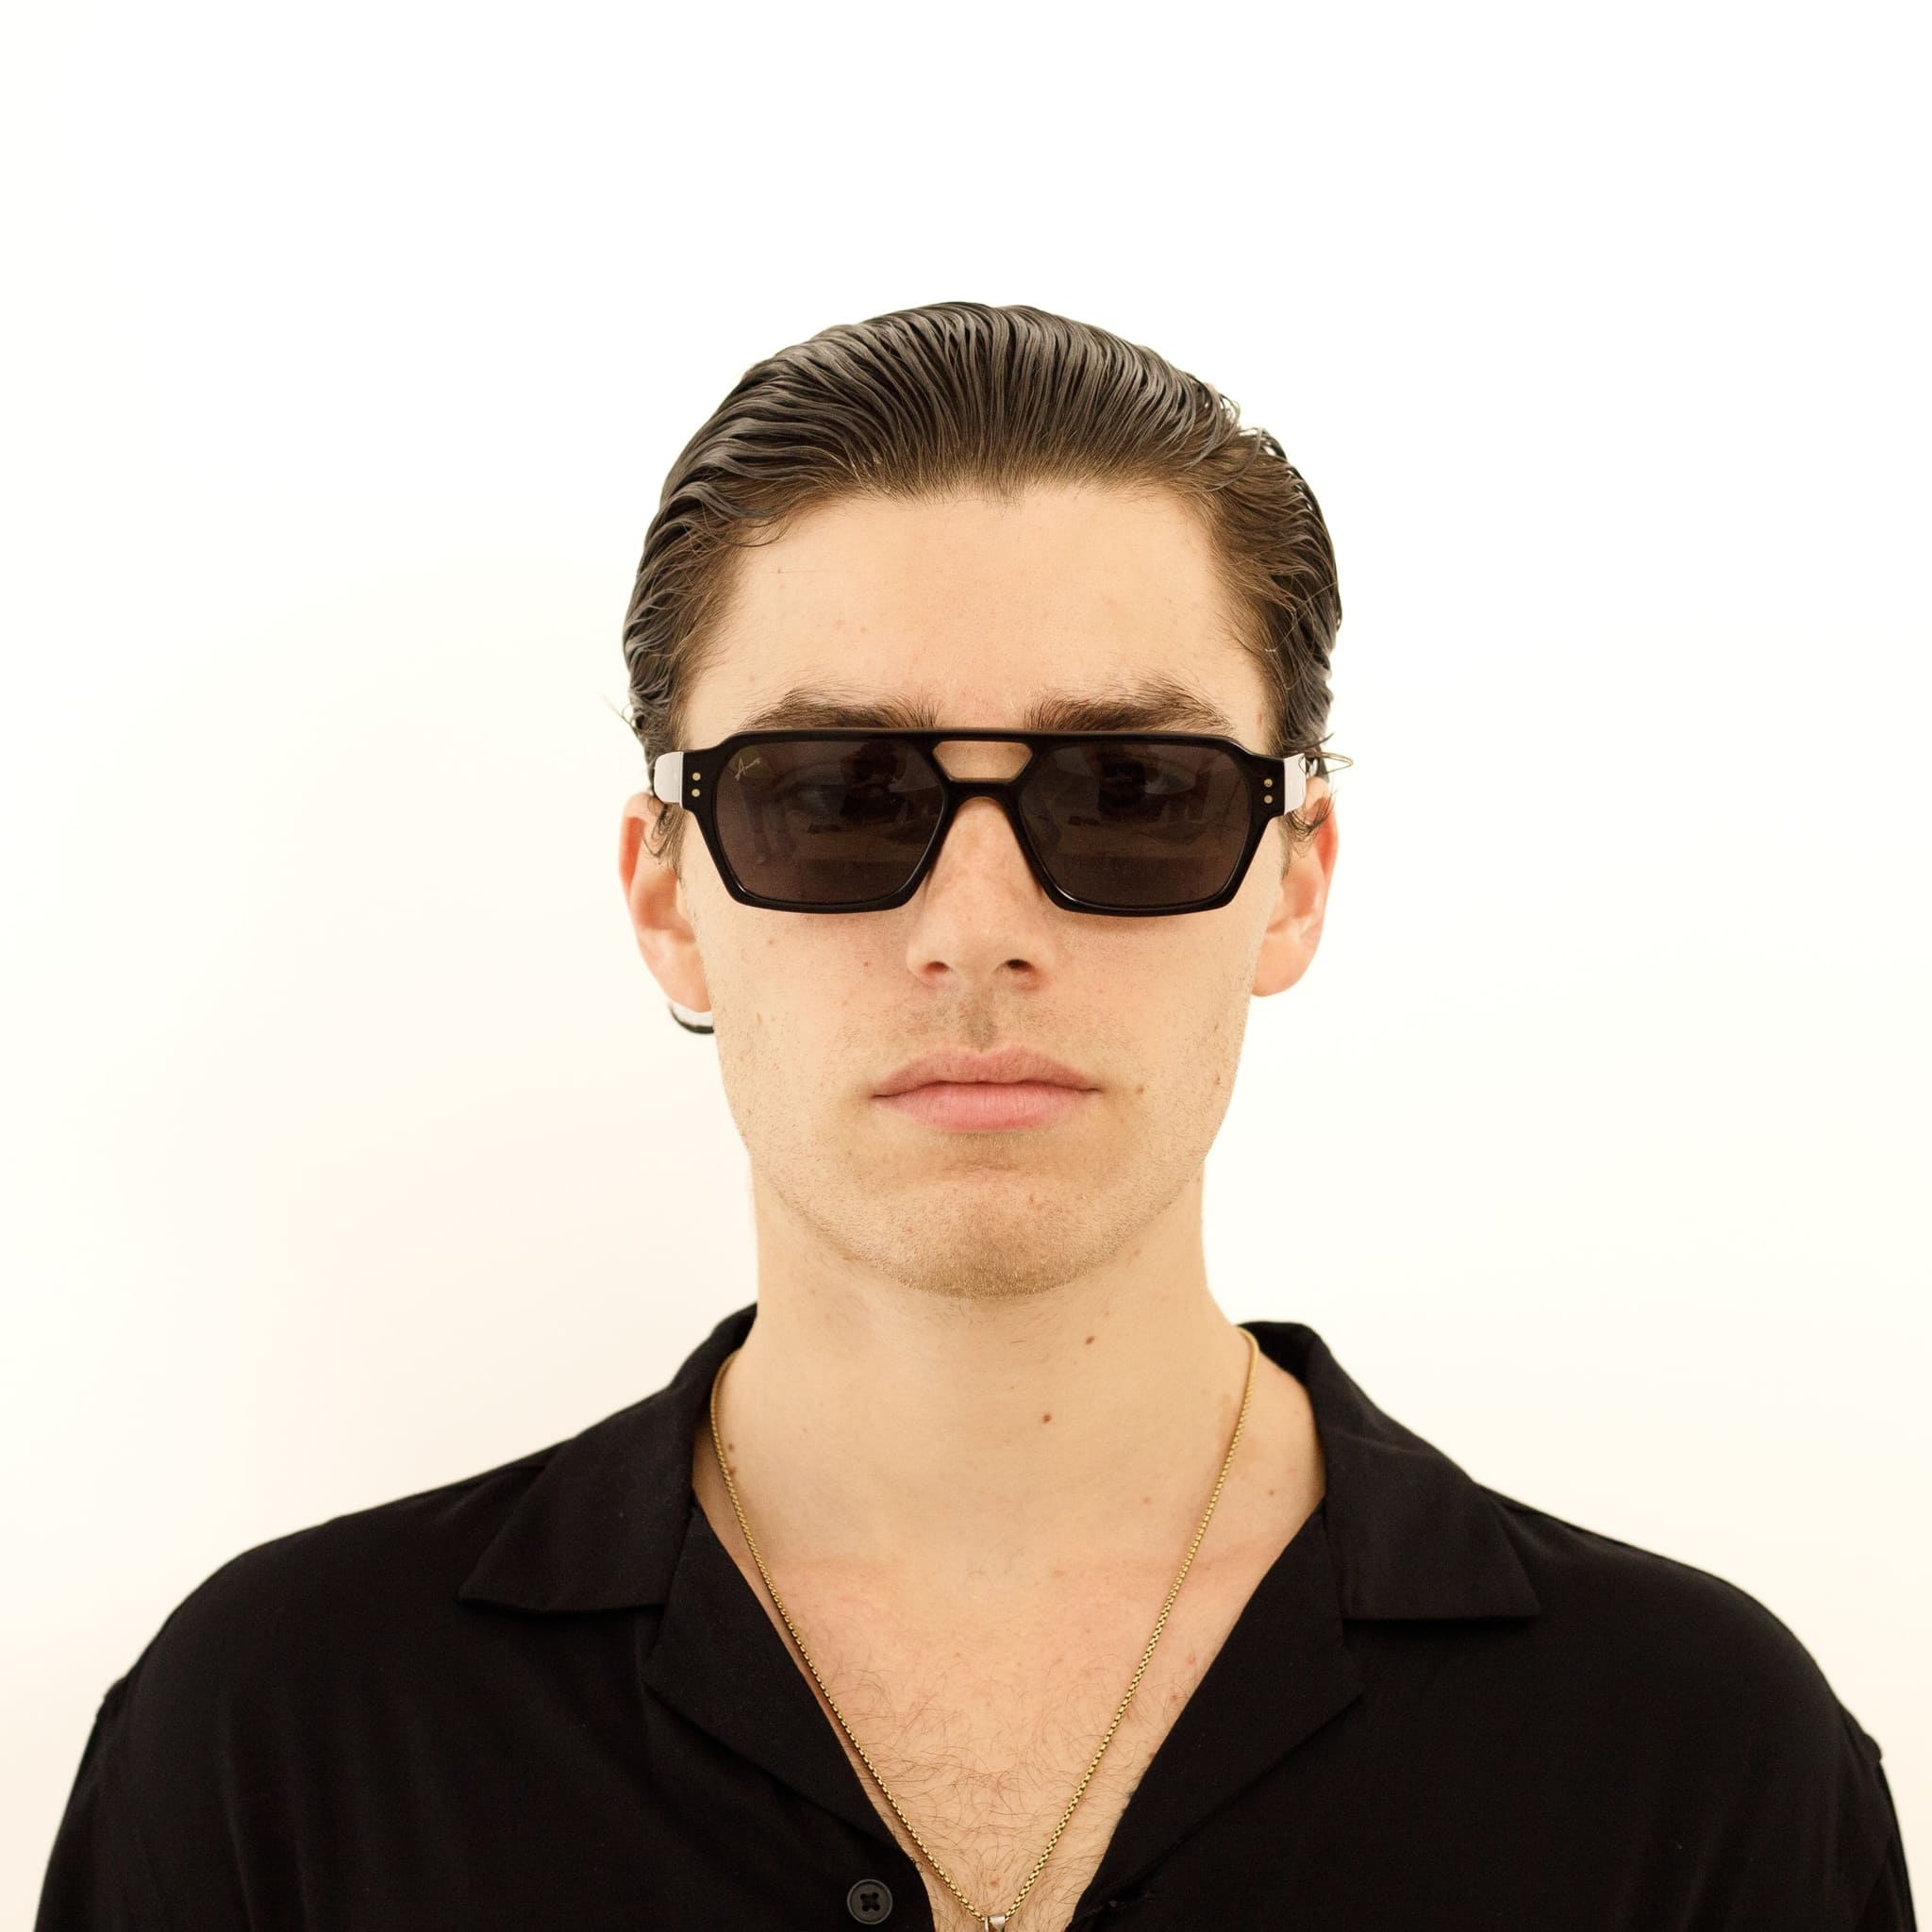 Ameos Identity collection Ego model. Black frames with black lenses. Genderless, gender neutral eyewear